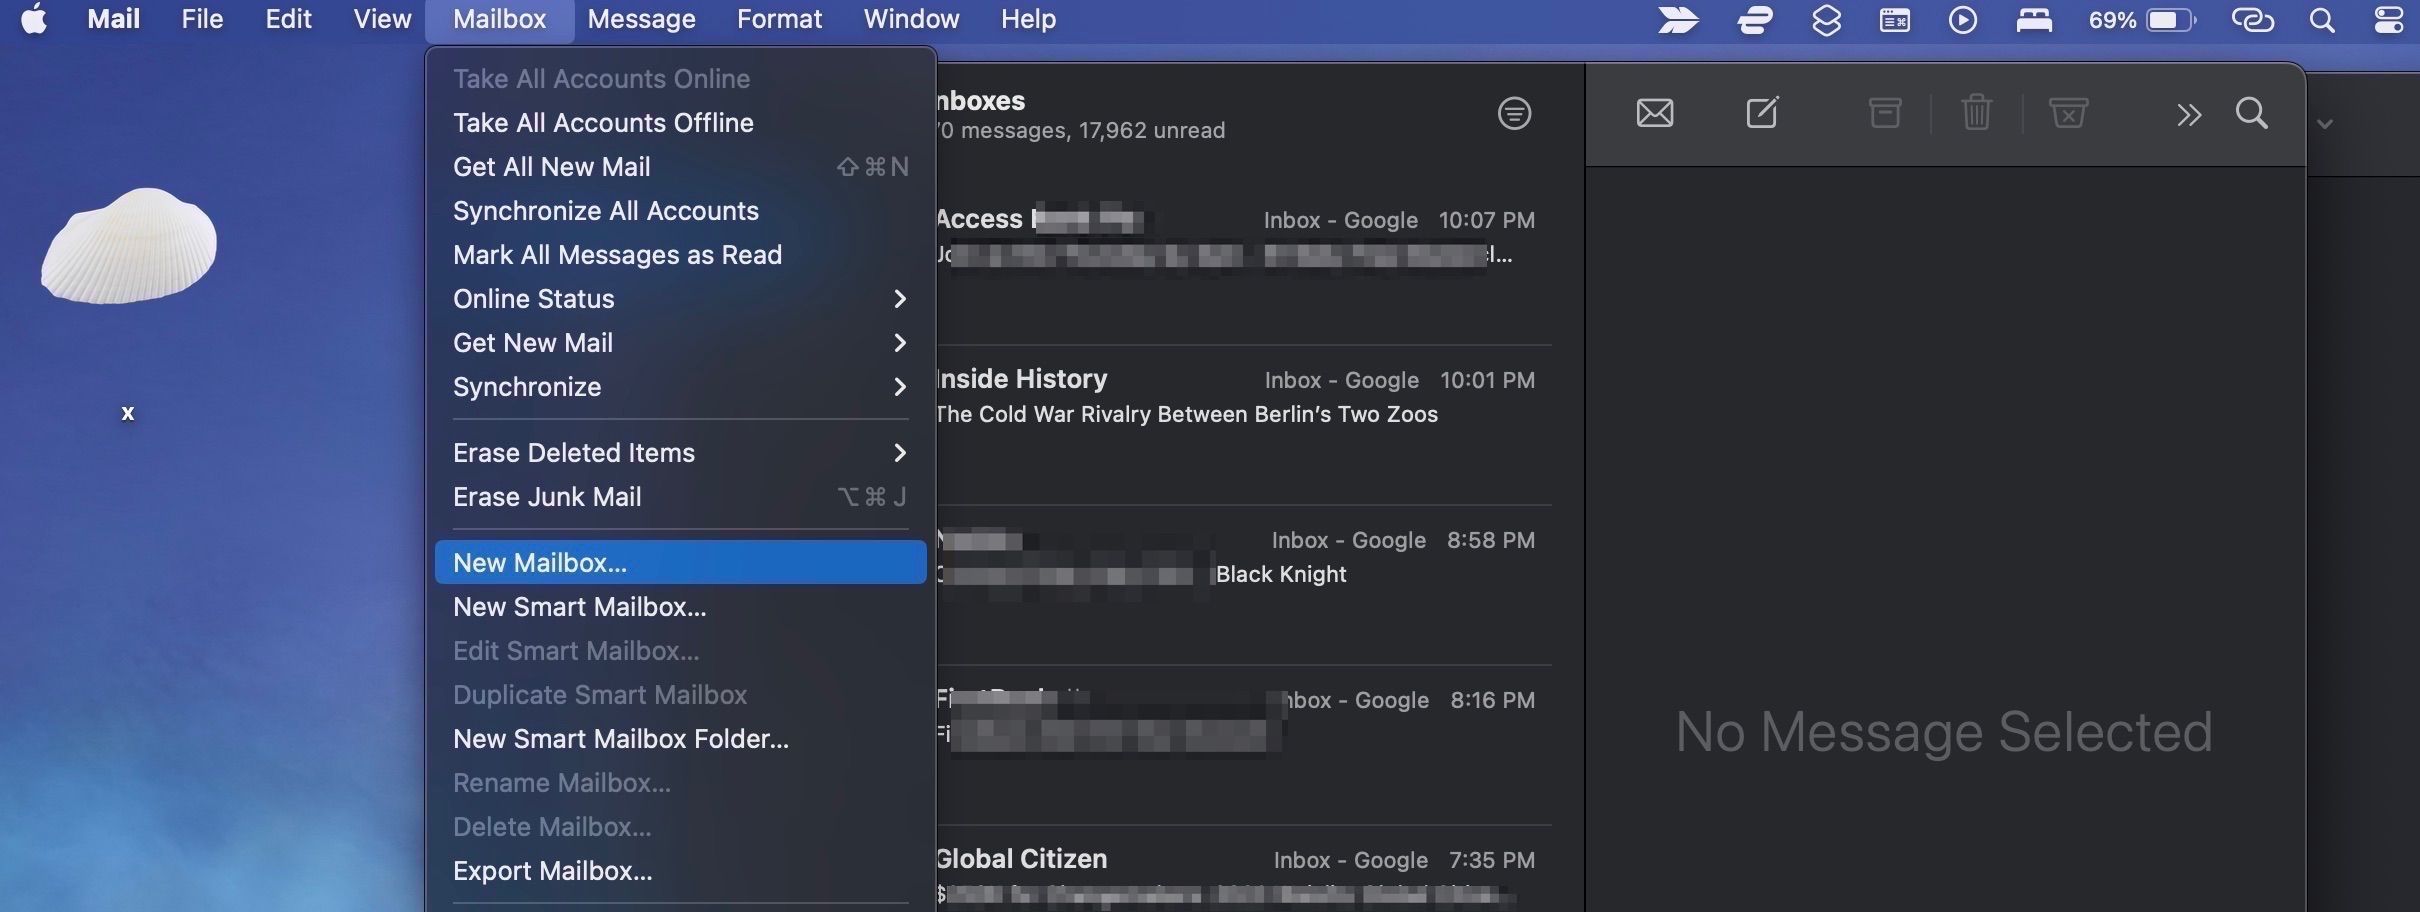 Selecting New Mailbox in macOS menu bar